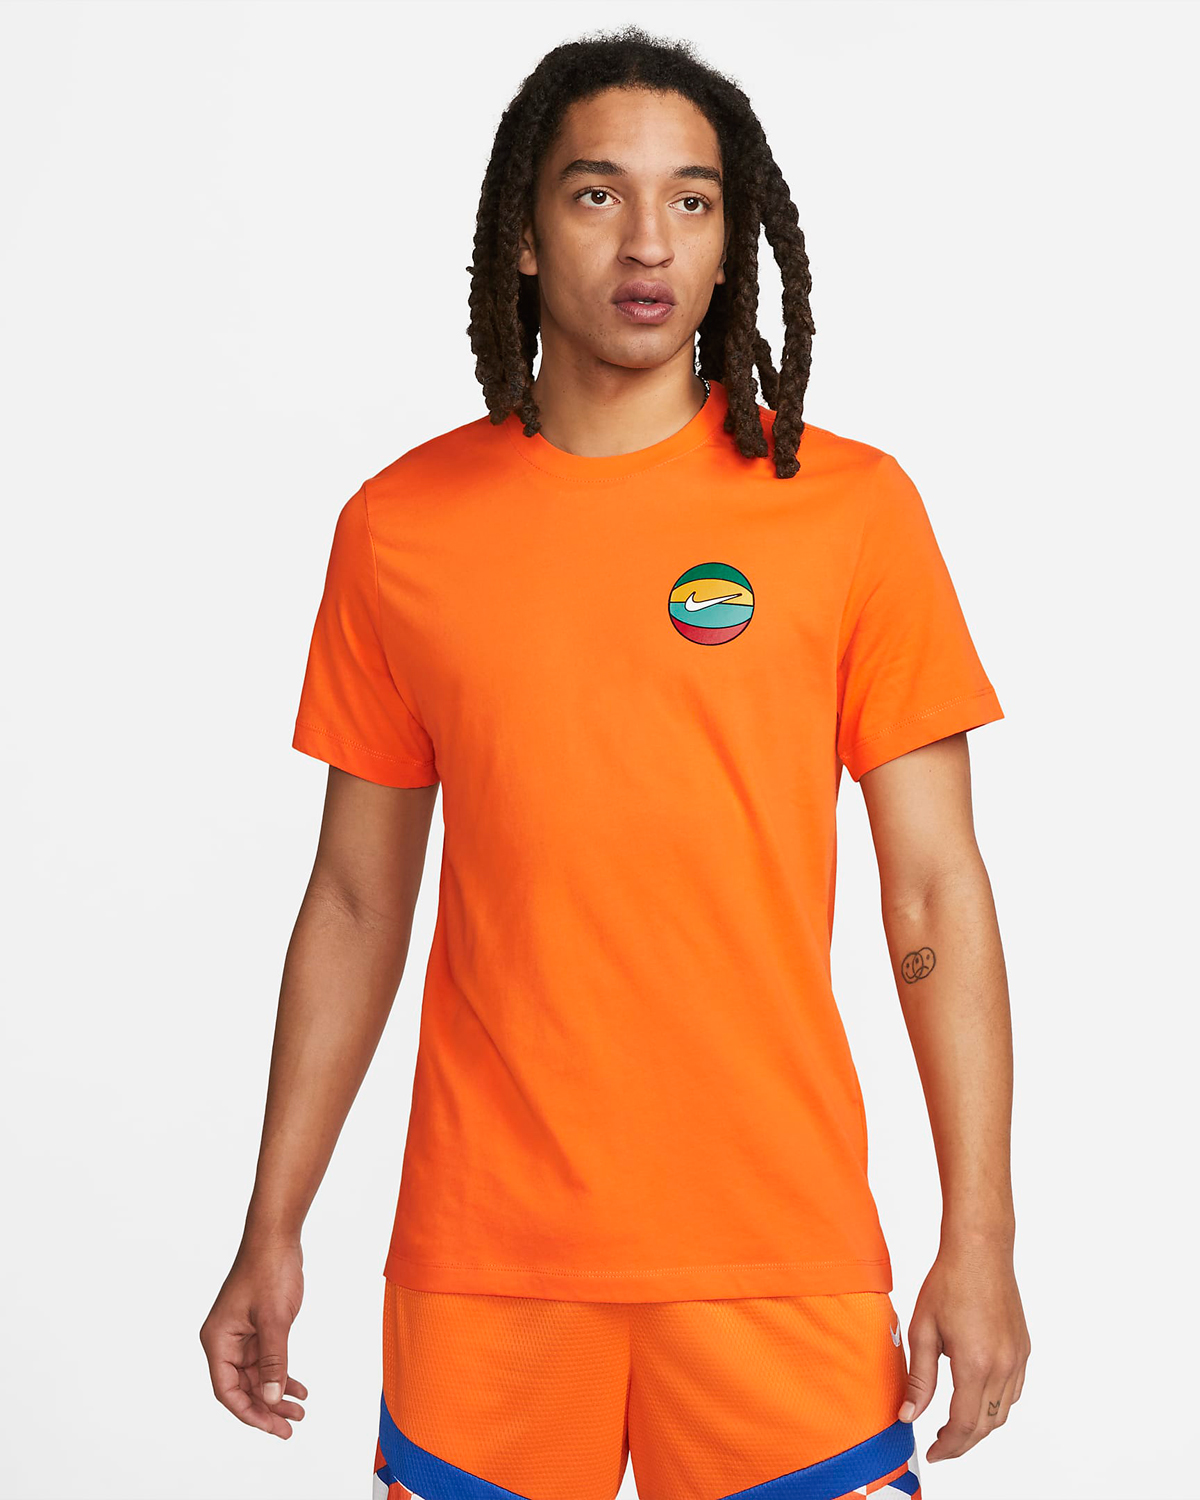 Nike-Basketball-T-Shirt-Orange-1